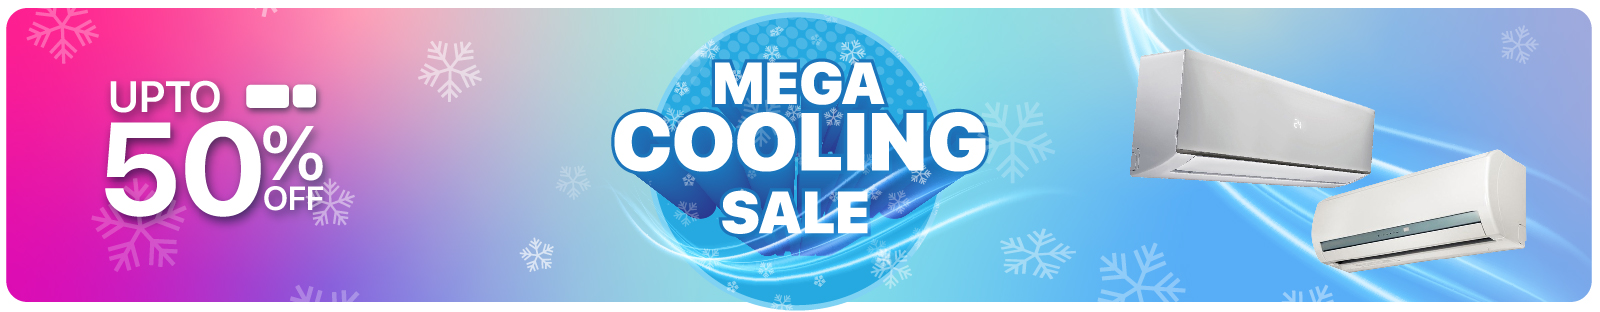 Mega Cooling Deals-01.jpg